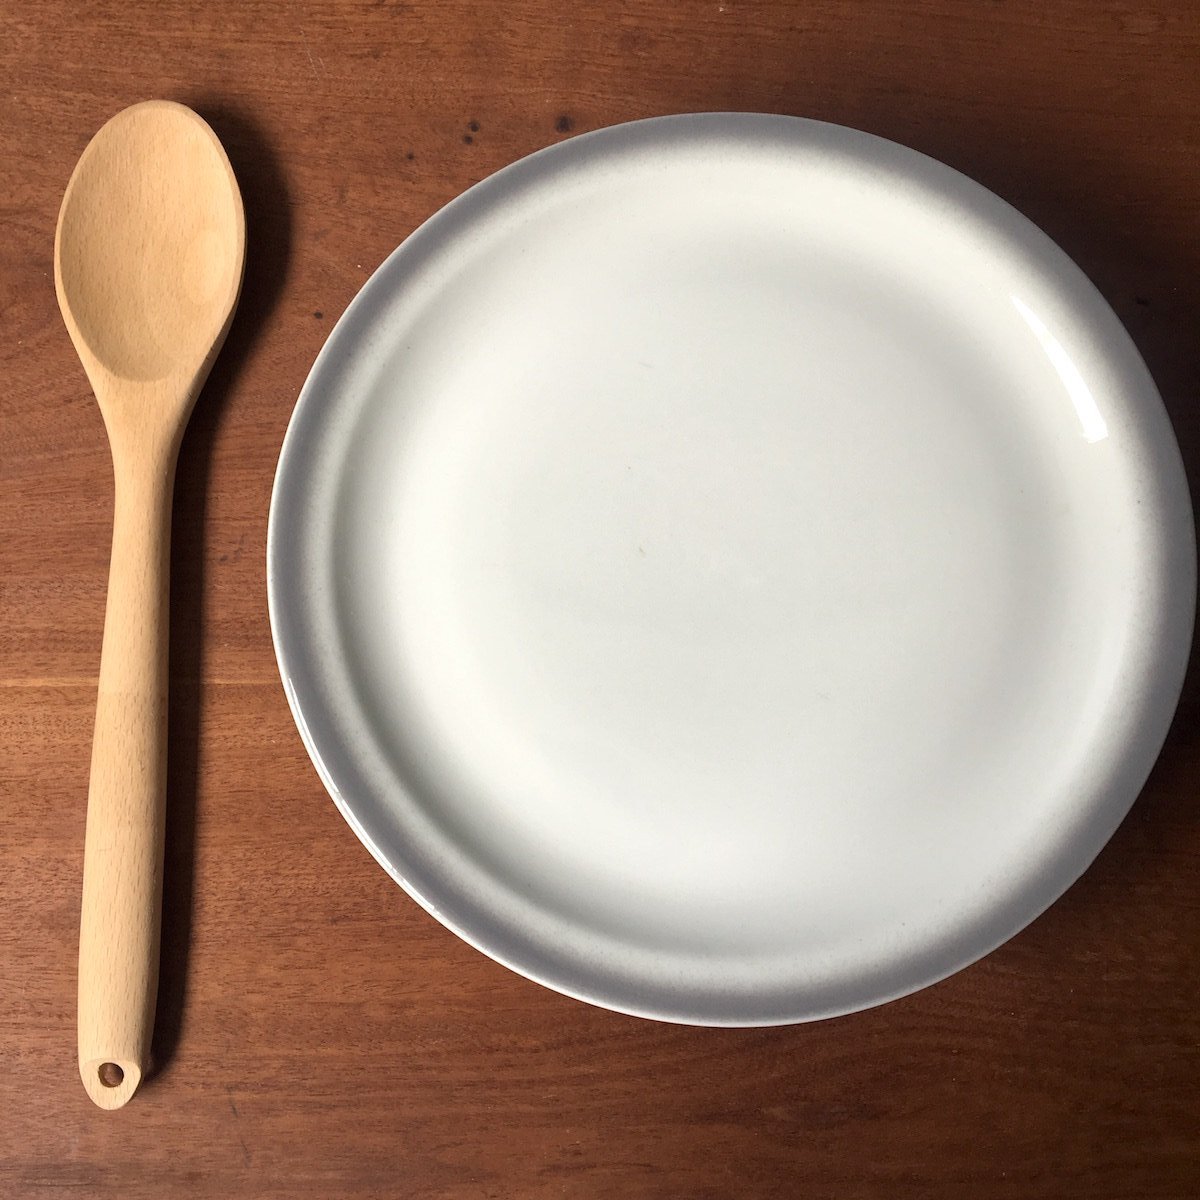 Shenango restaurant ware dinner plates - set of 4 - gray rim